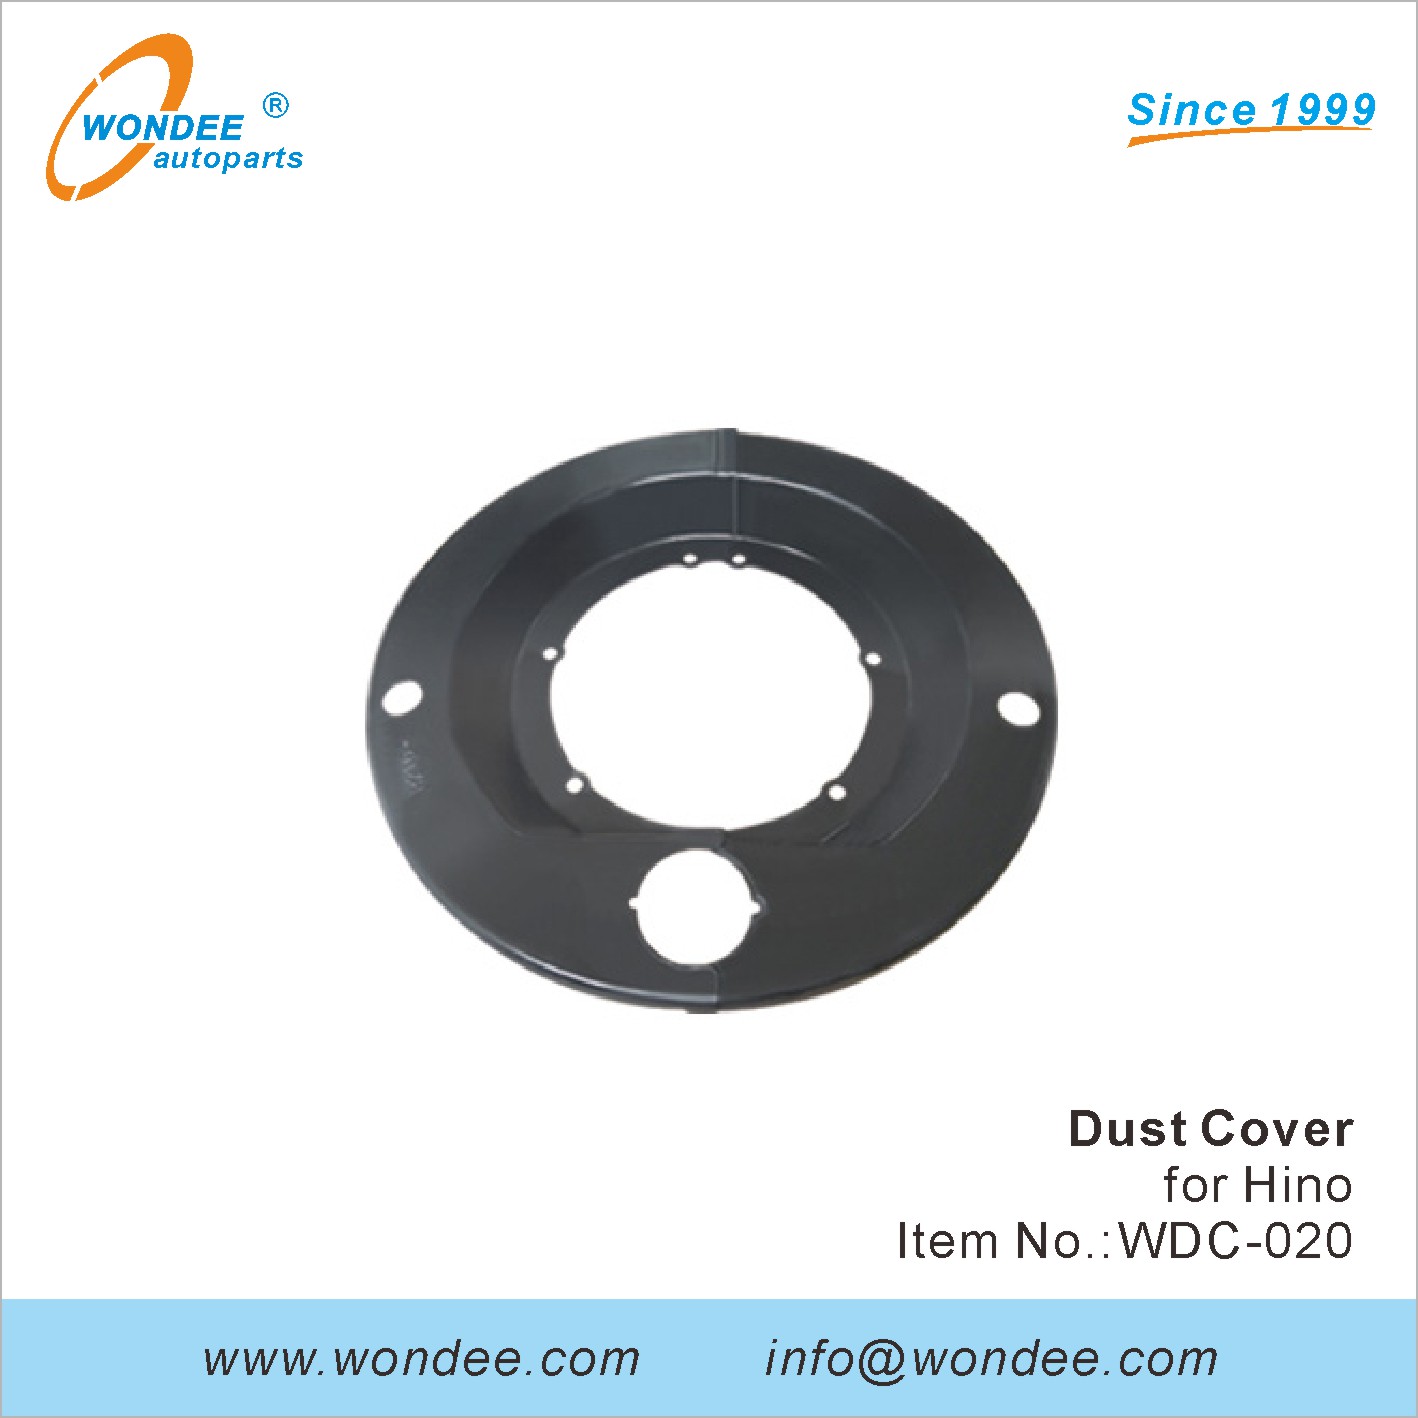 WONDEE dust cover (20)